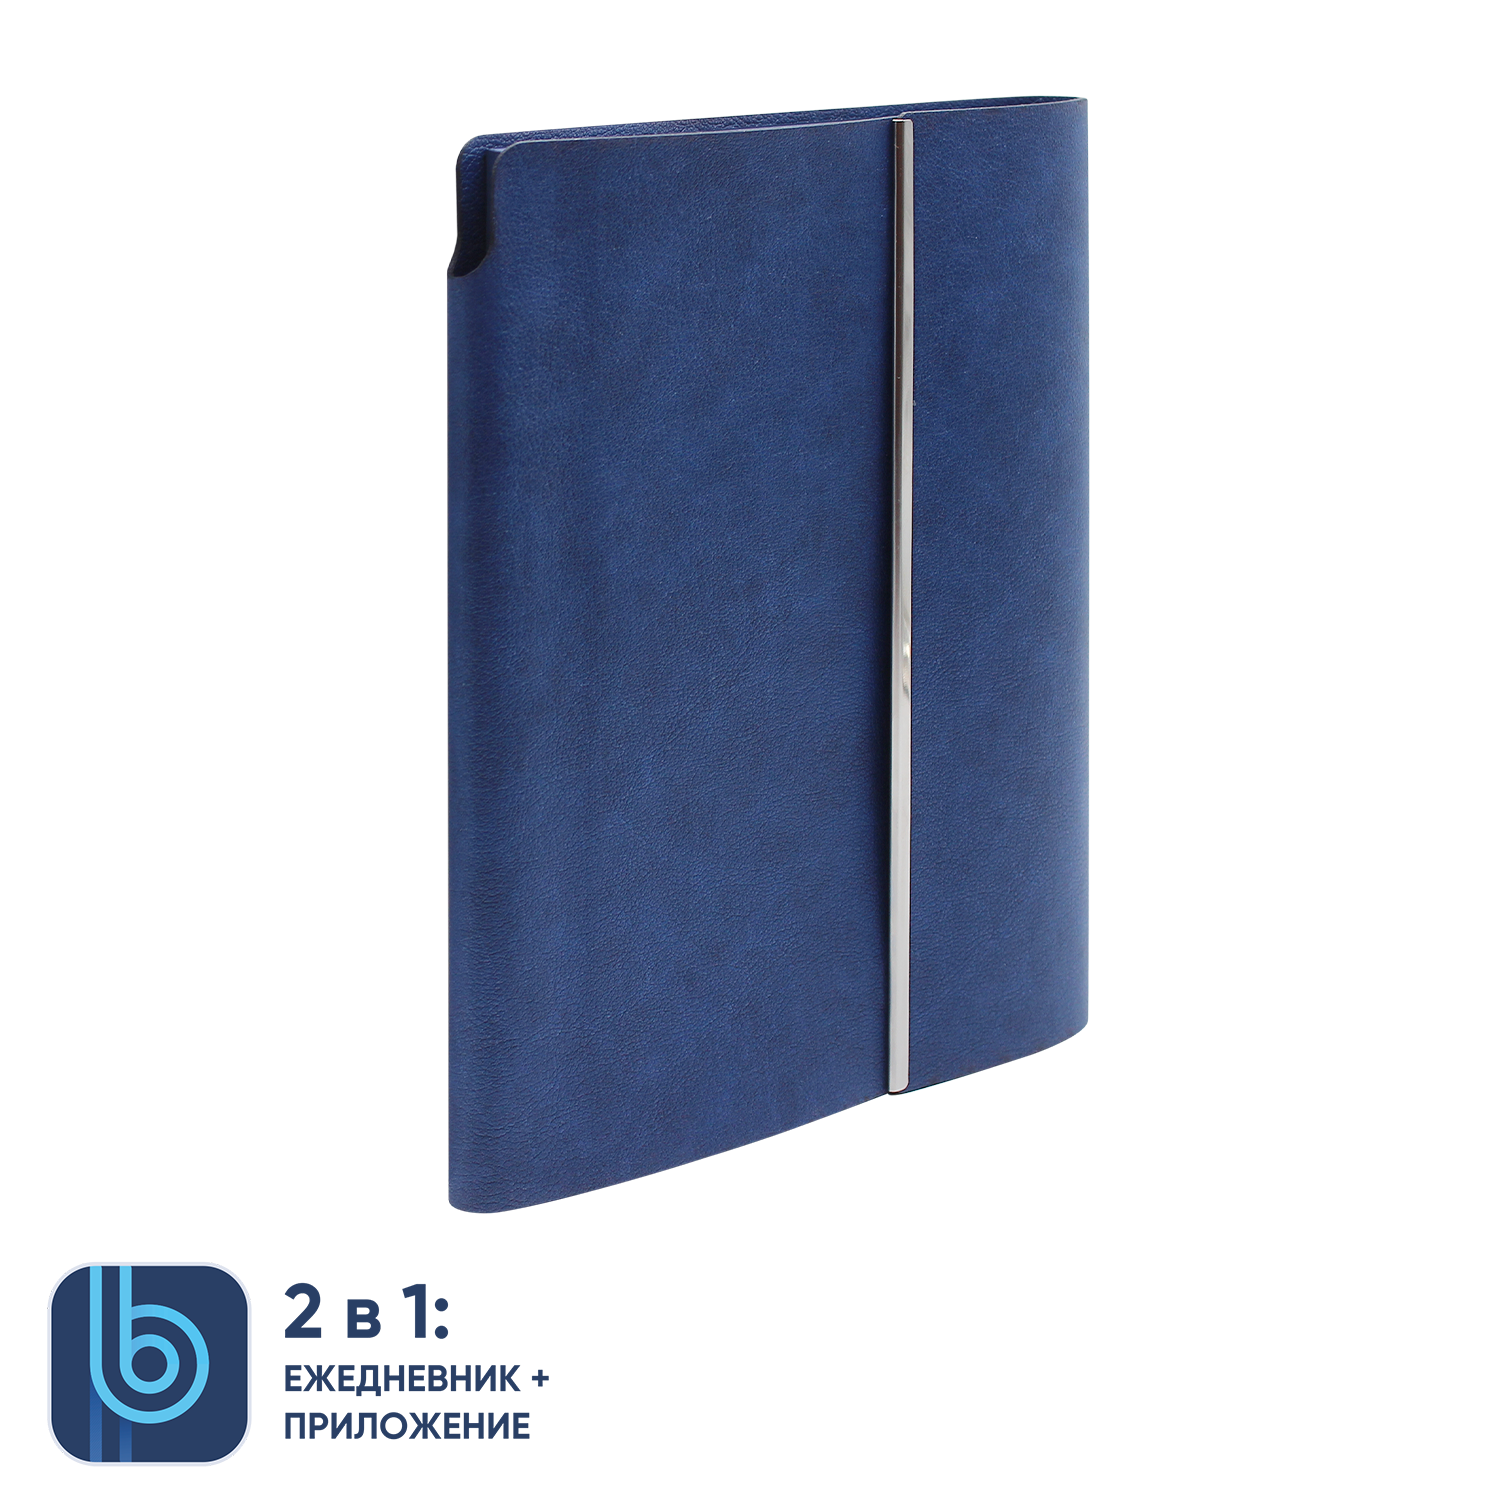 Ежедневник Bplanner.03 blue	 (синий), синий, кожзам